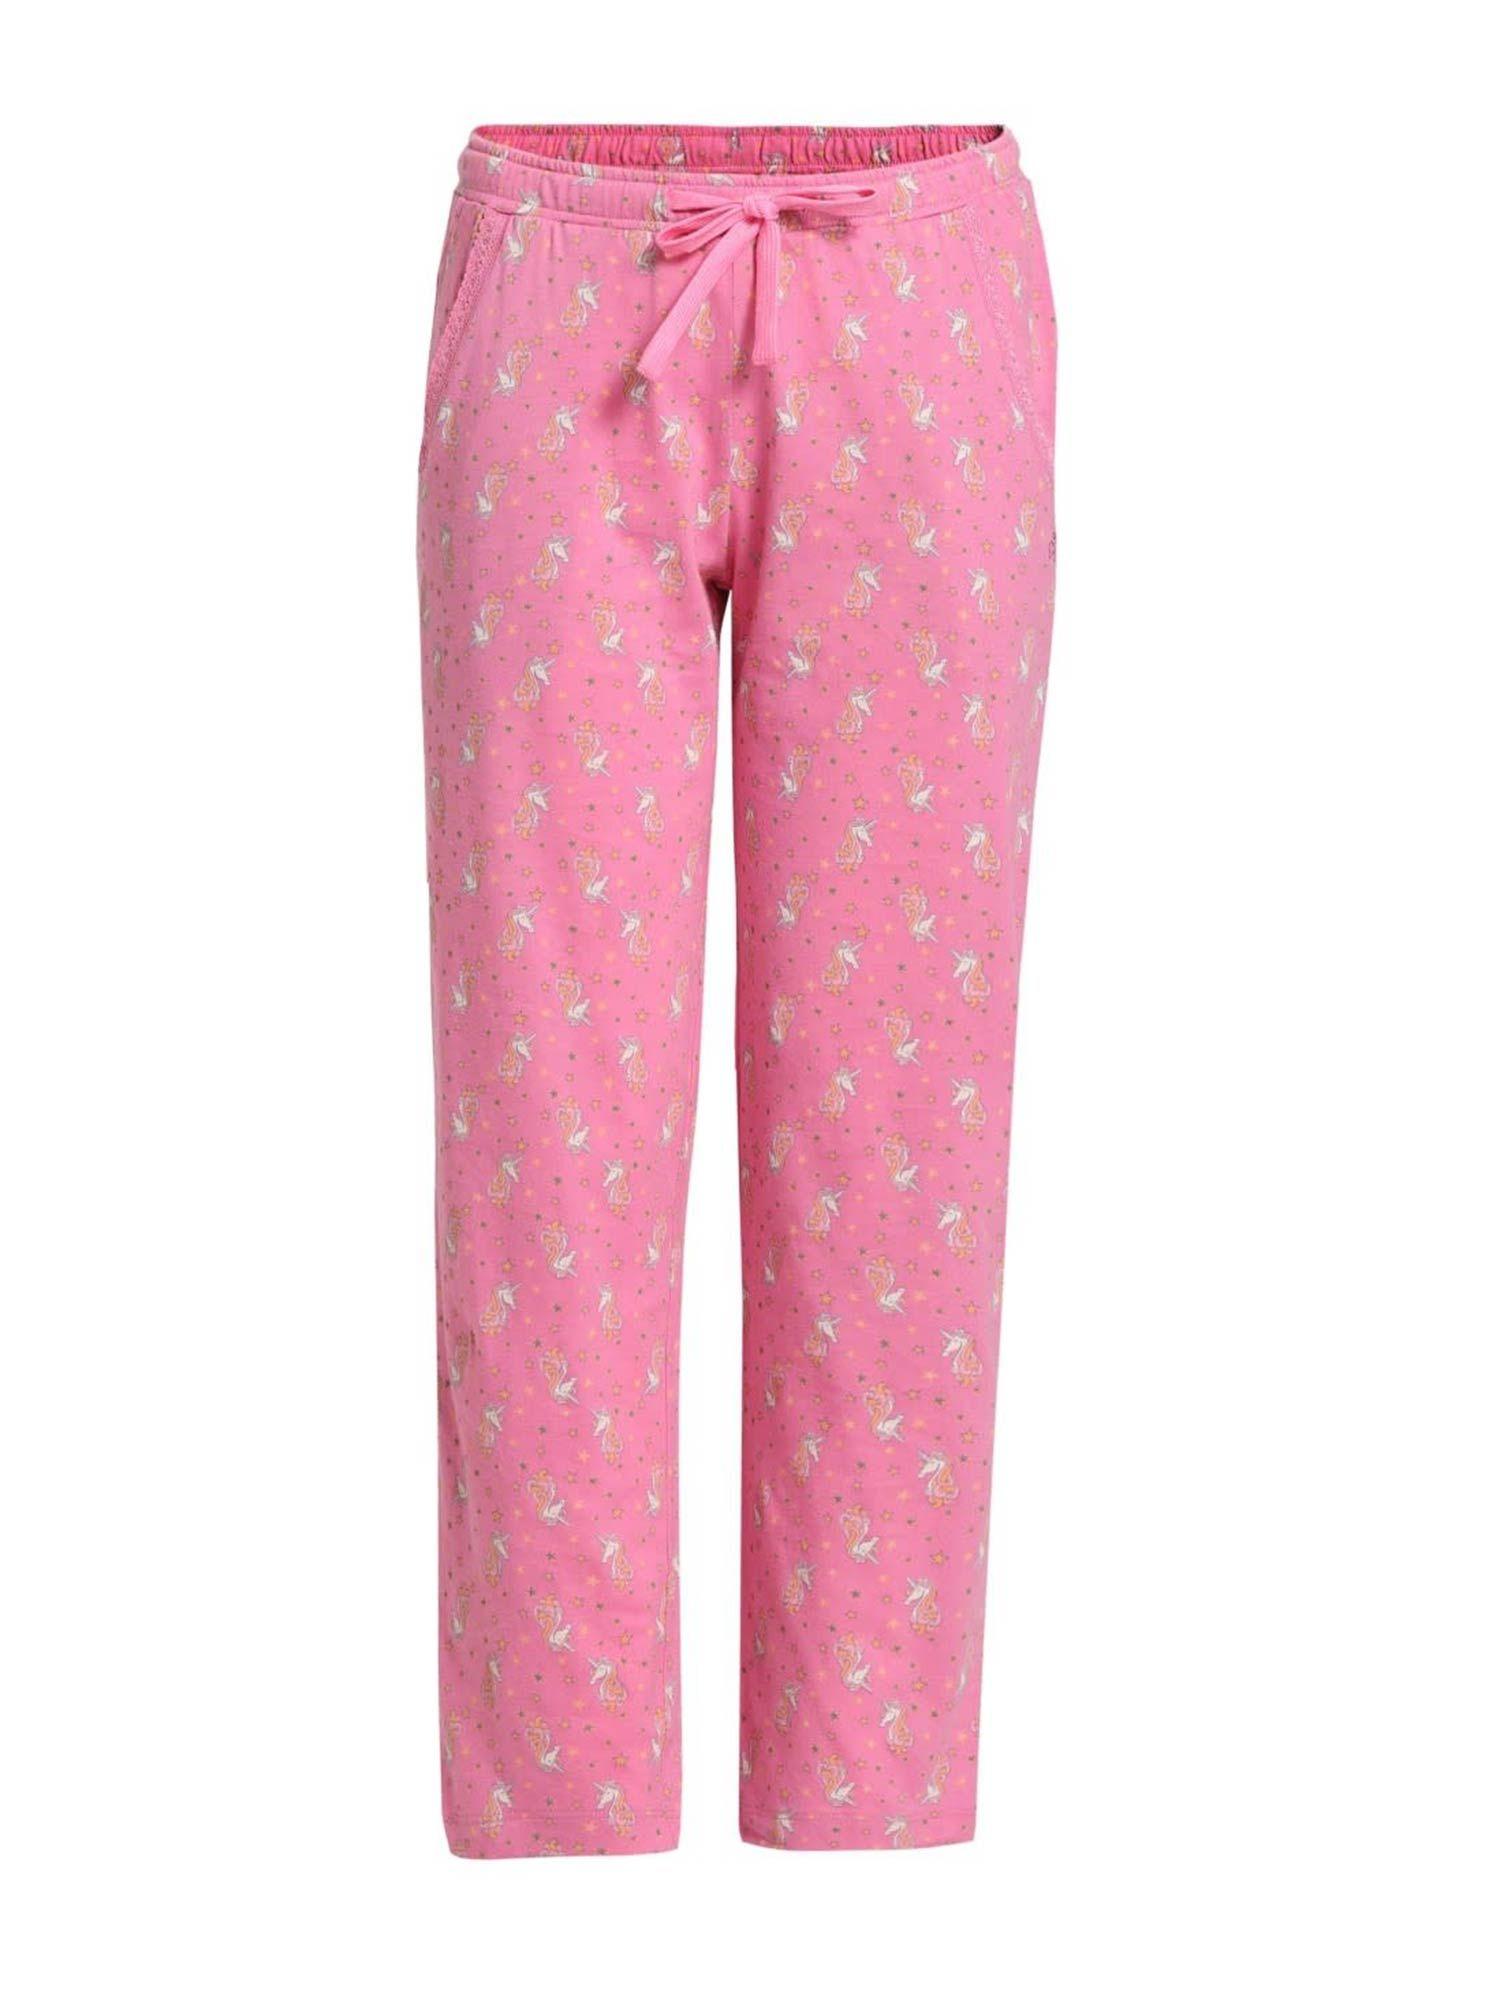 pink printed pyjama